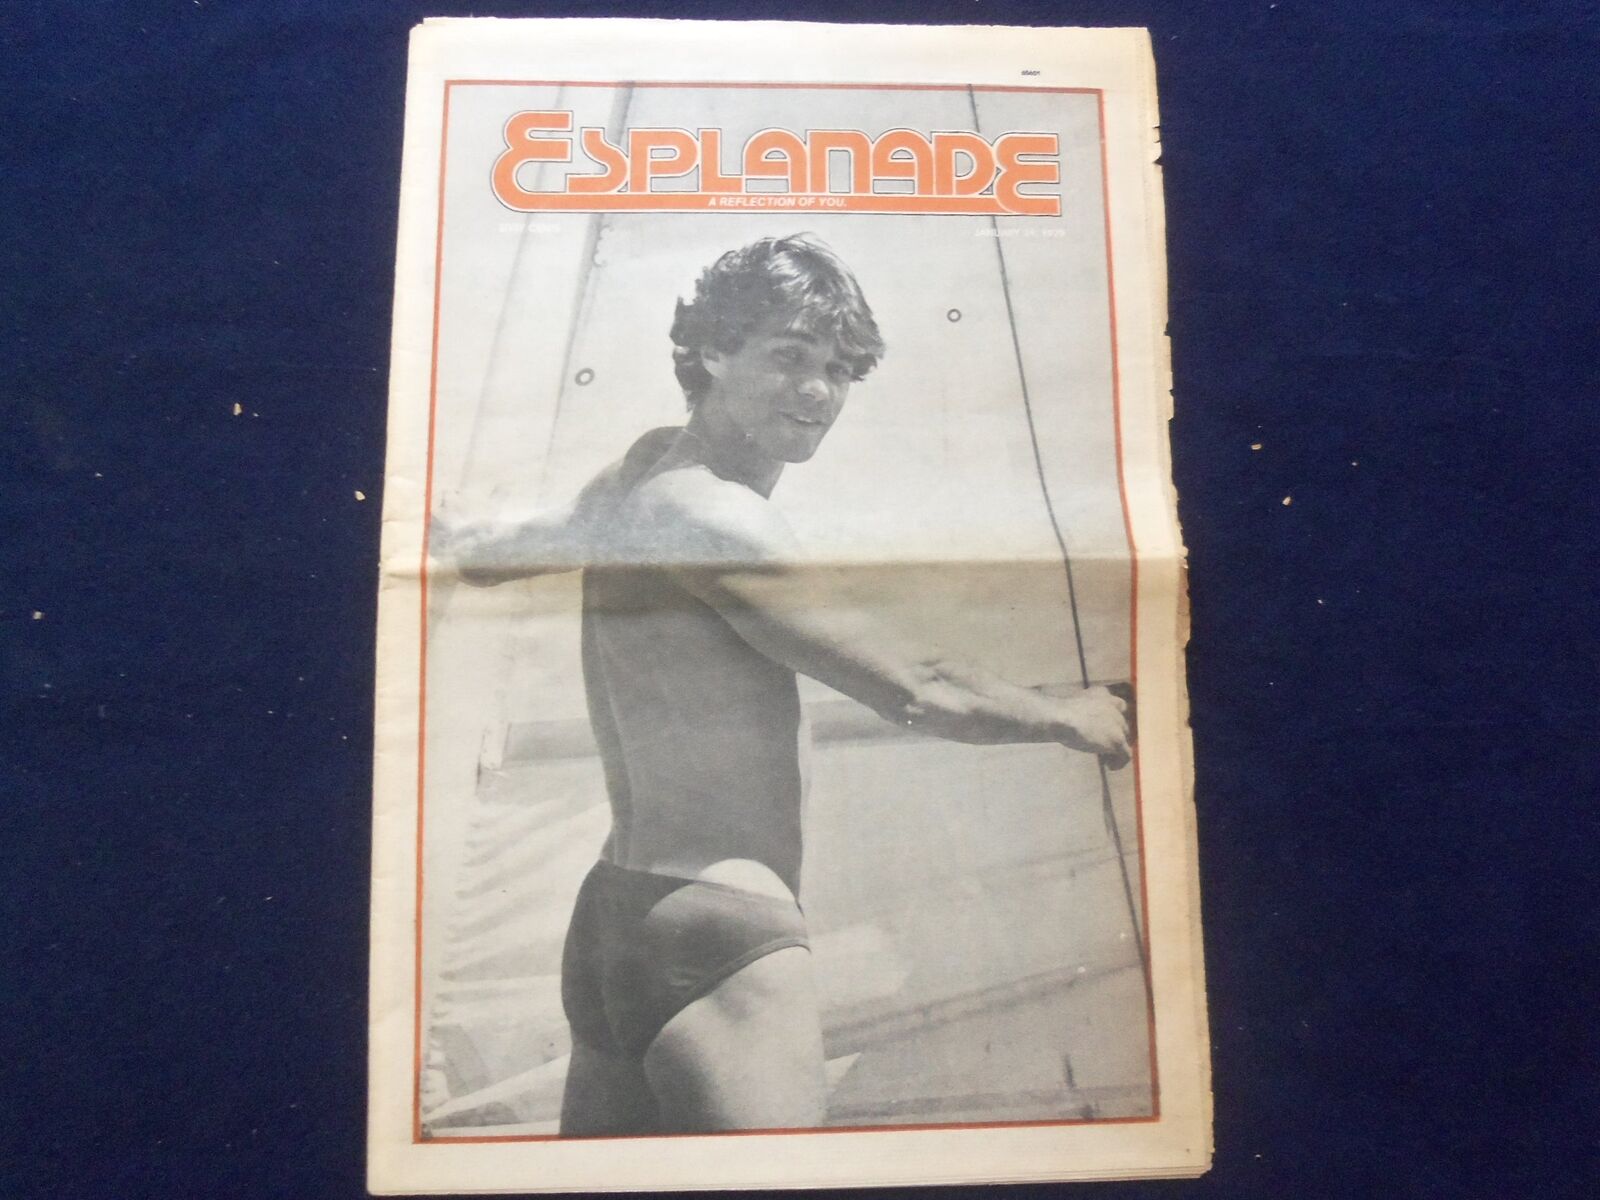 1980 FEBRUARY 18 ESPLANADE NEWSPAPER - 1979 JANUARY 31 DATE ON COVER - NP 6826